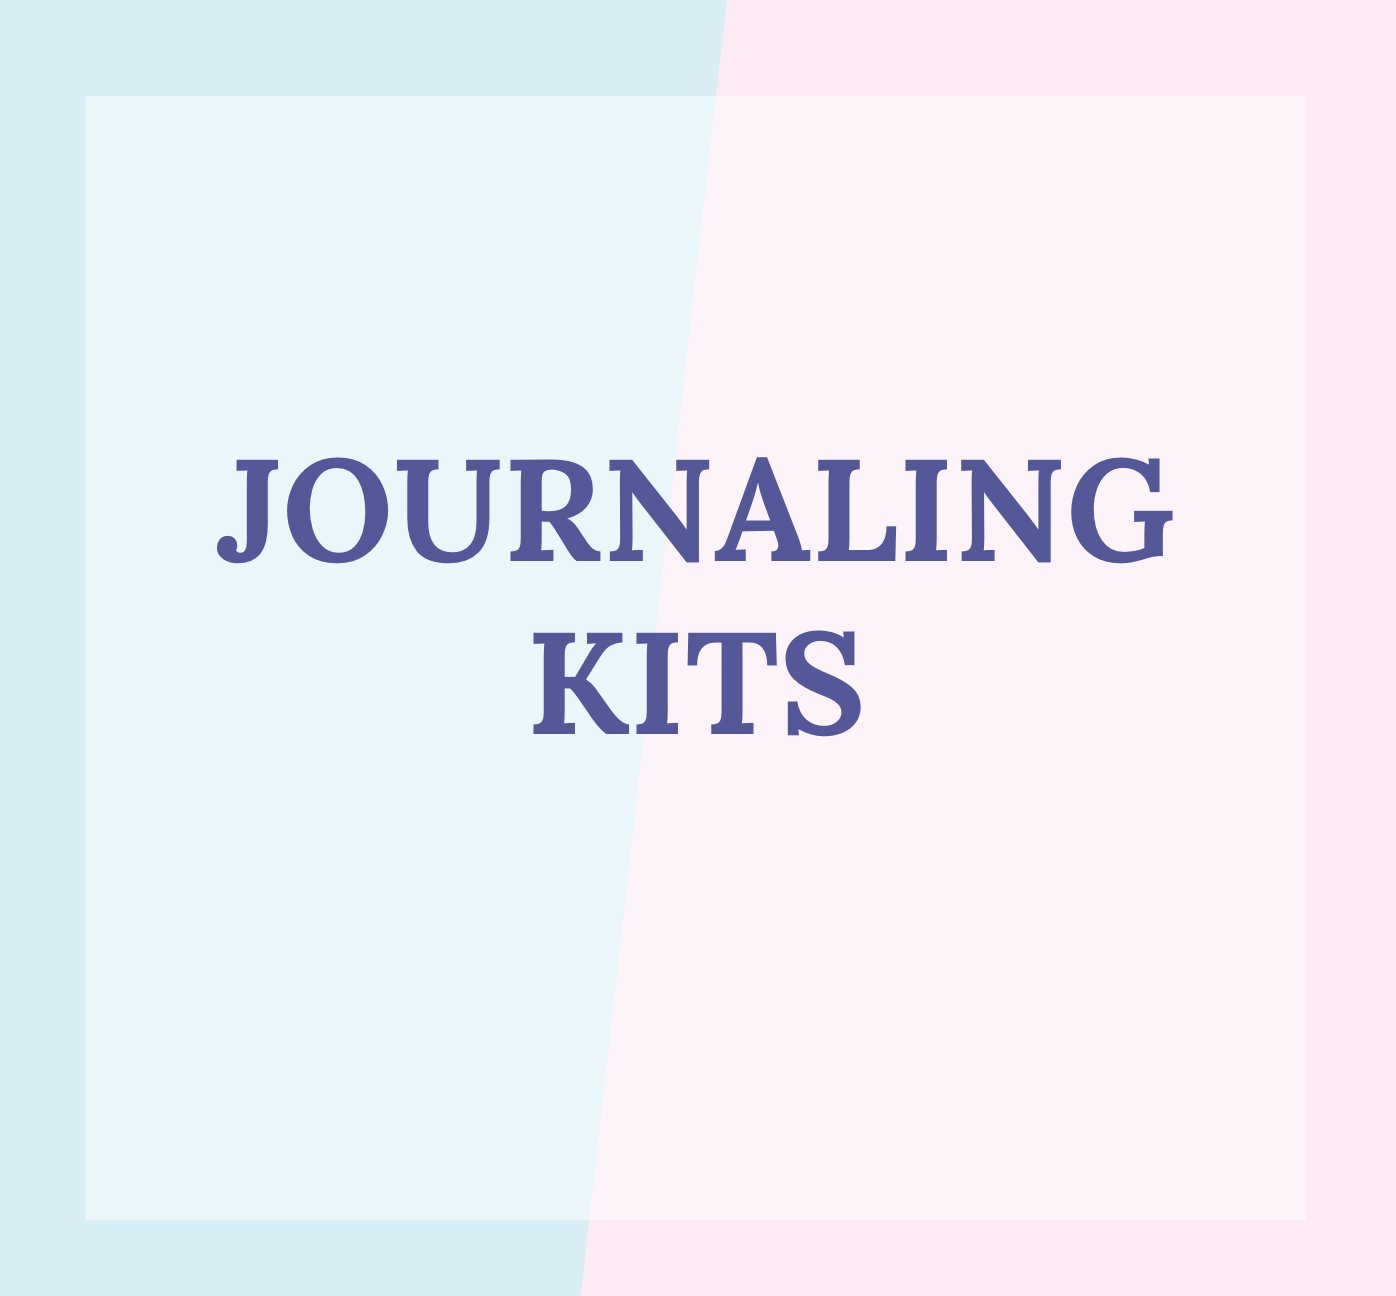 Journal Sticker Kits – Bolderbon